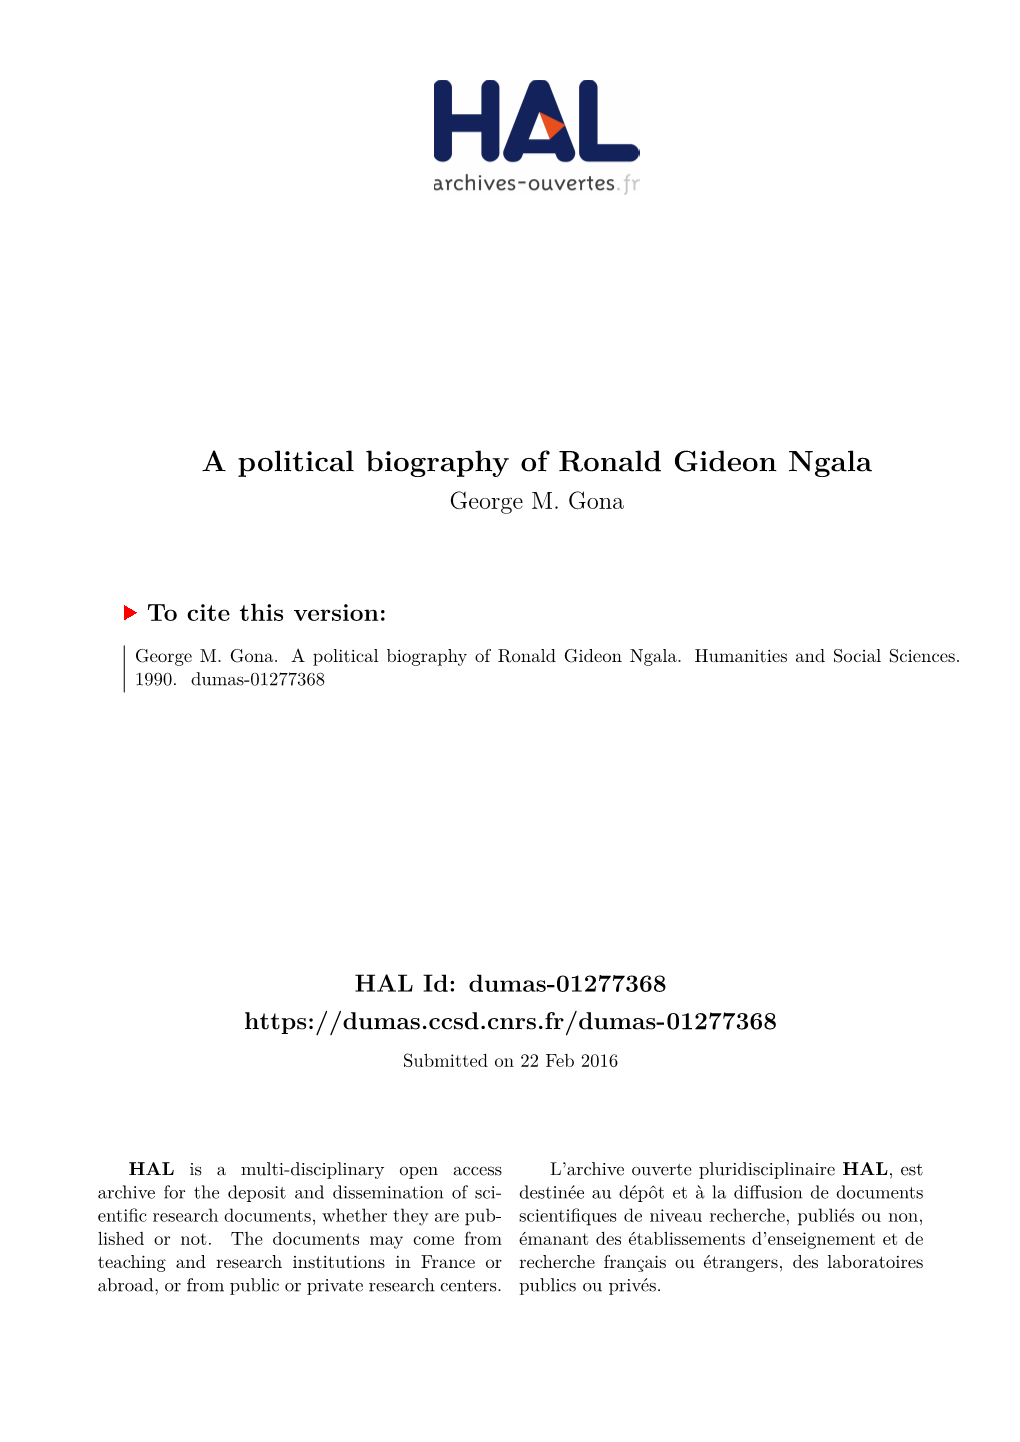 A Political Biography of Ronald Gideon Ngala George M